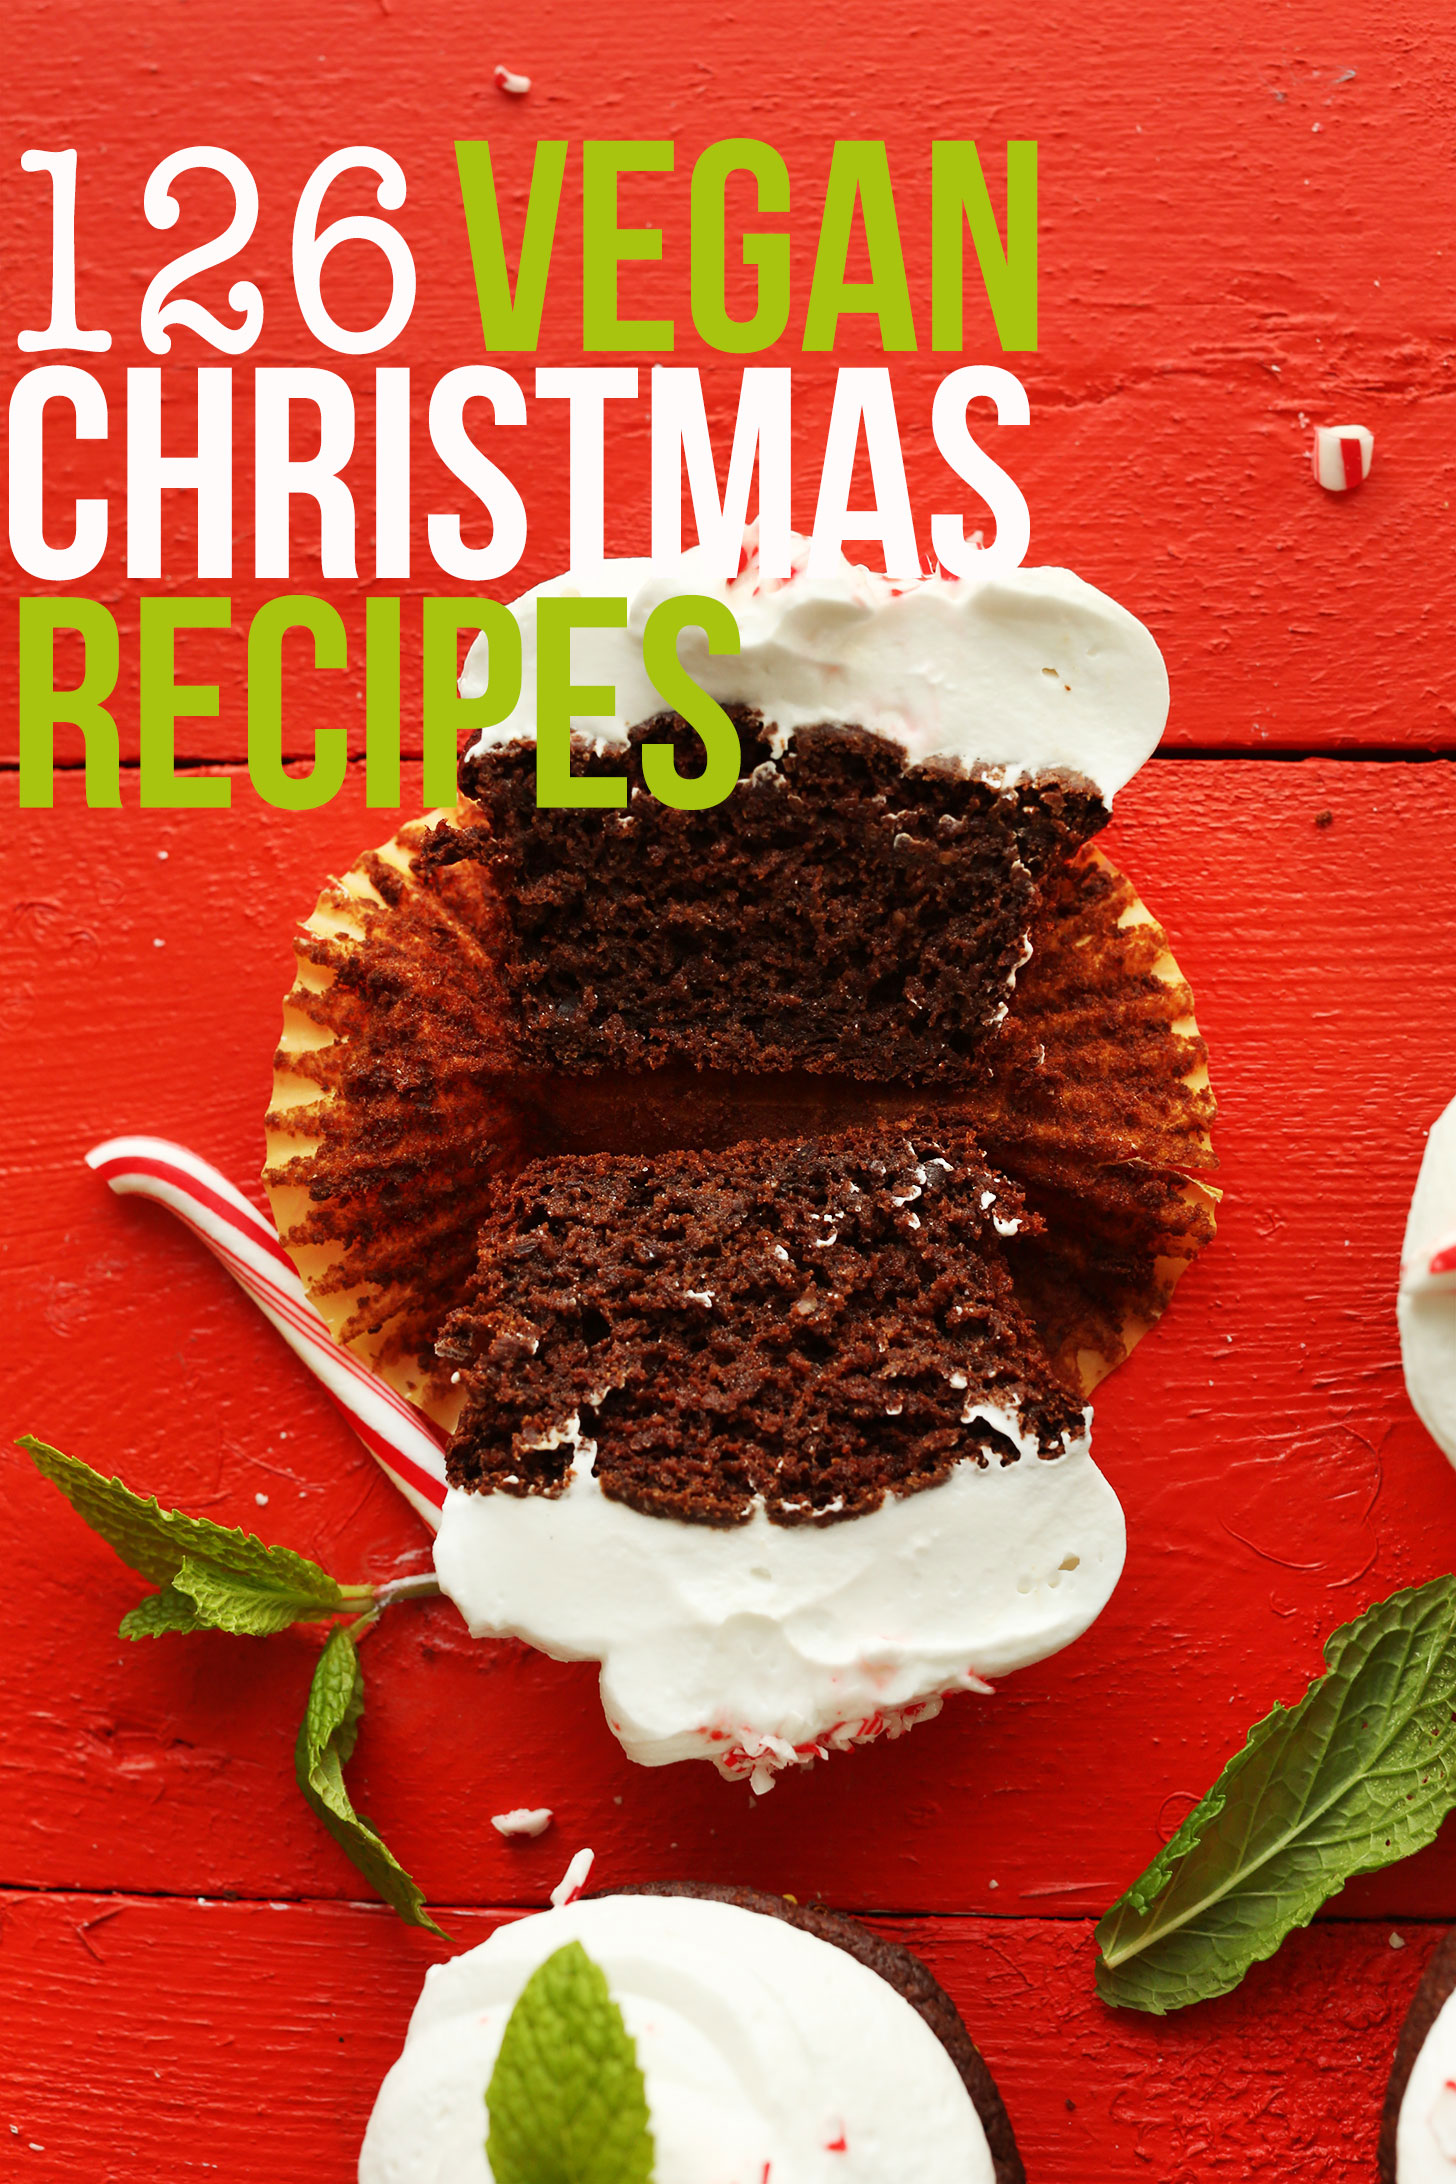 Vegan cupcakes for one of our 126 Vegan Christmas Recipe ideas